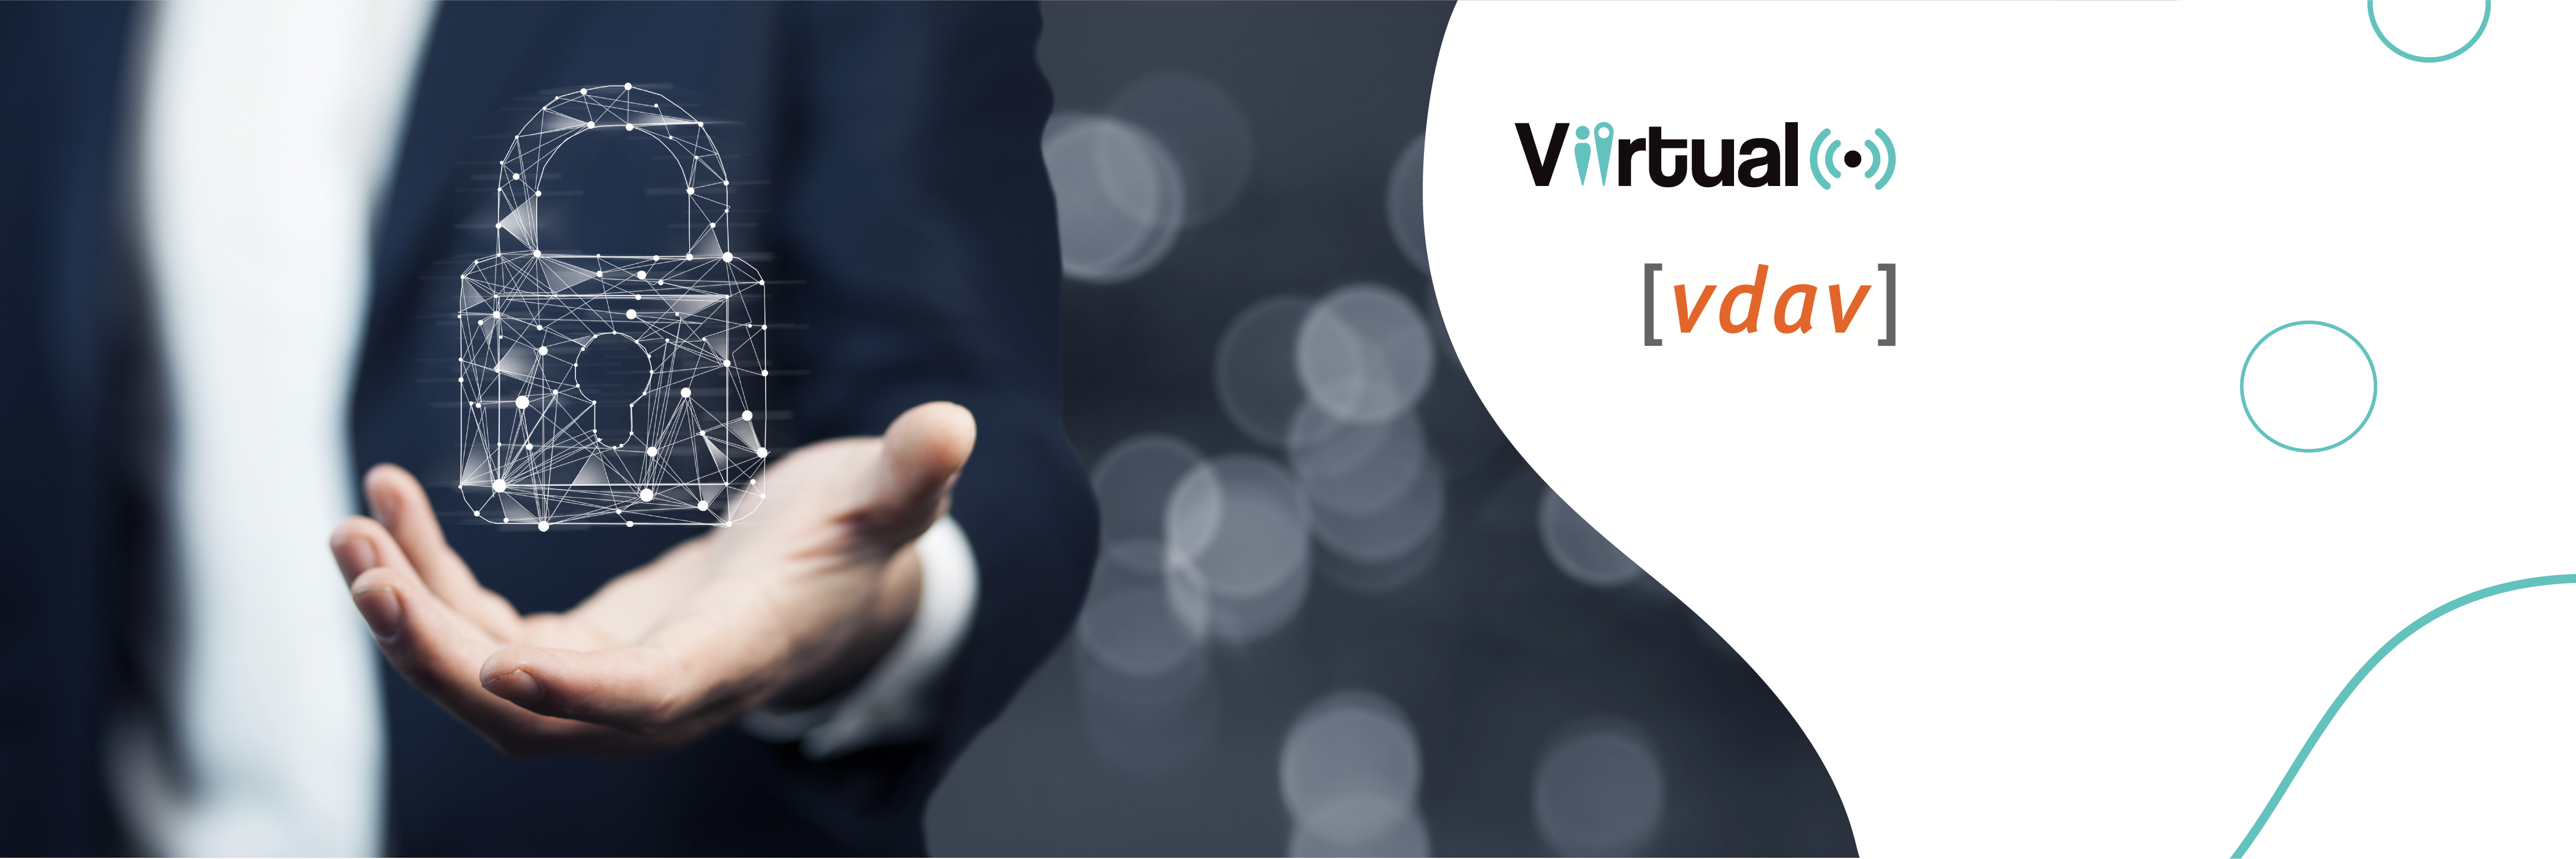 Siinda virttual logo and VDAV logo with an image of virtual lock